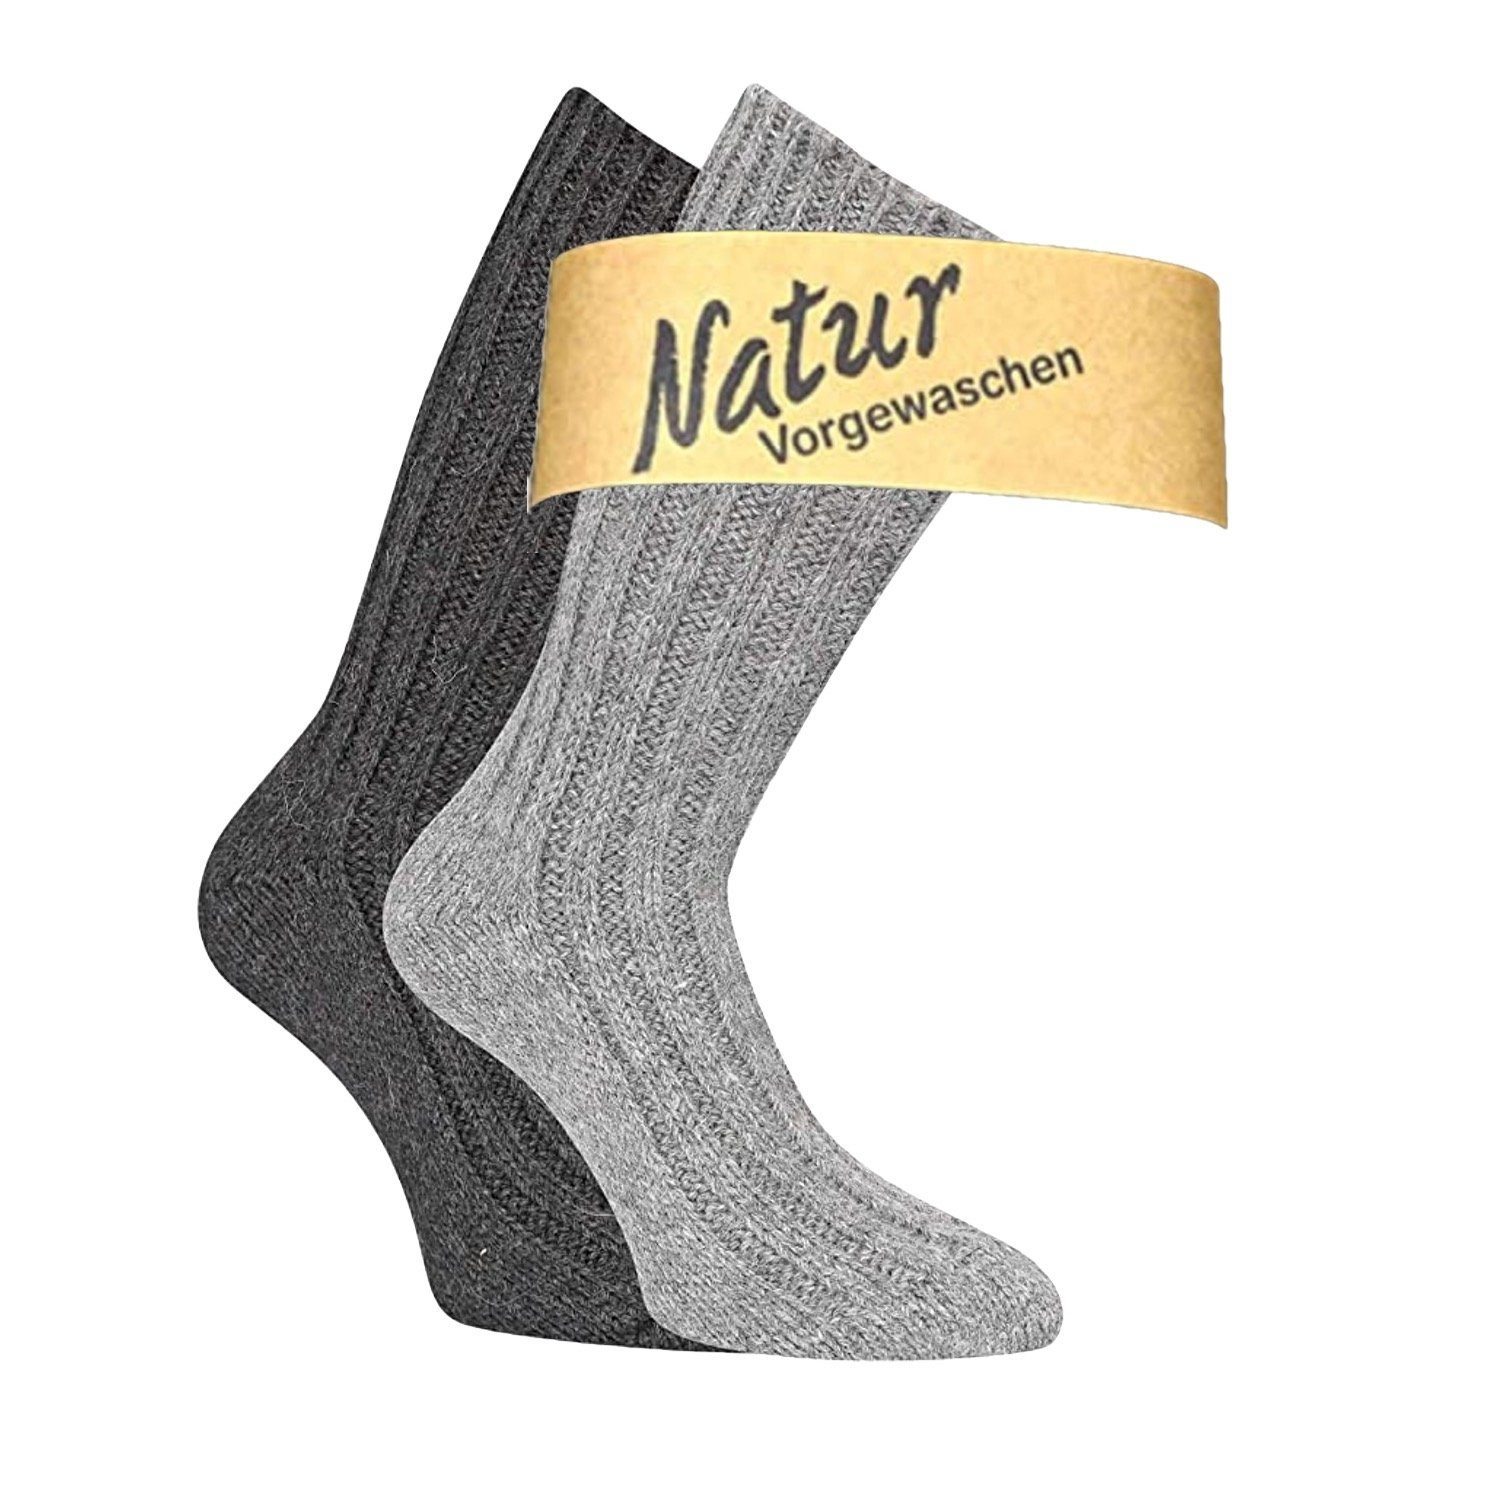 gestrickt (2-Paar) Socken Wollsocken Alpaka underwear wie Cocain grau-schwarz selbst Socken Stricksocken